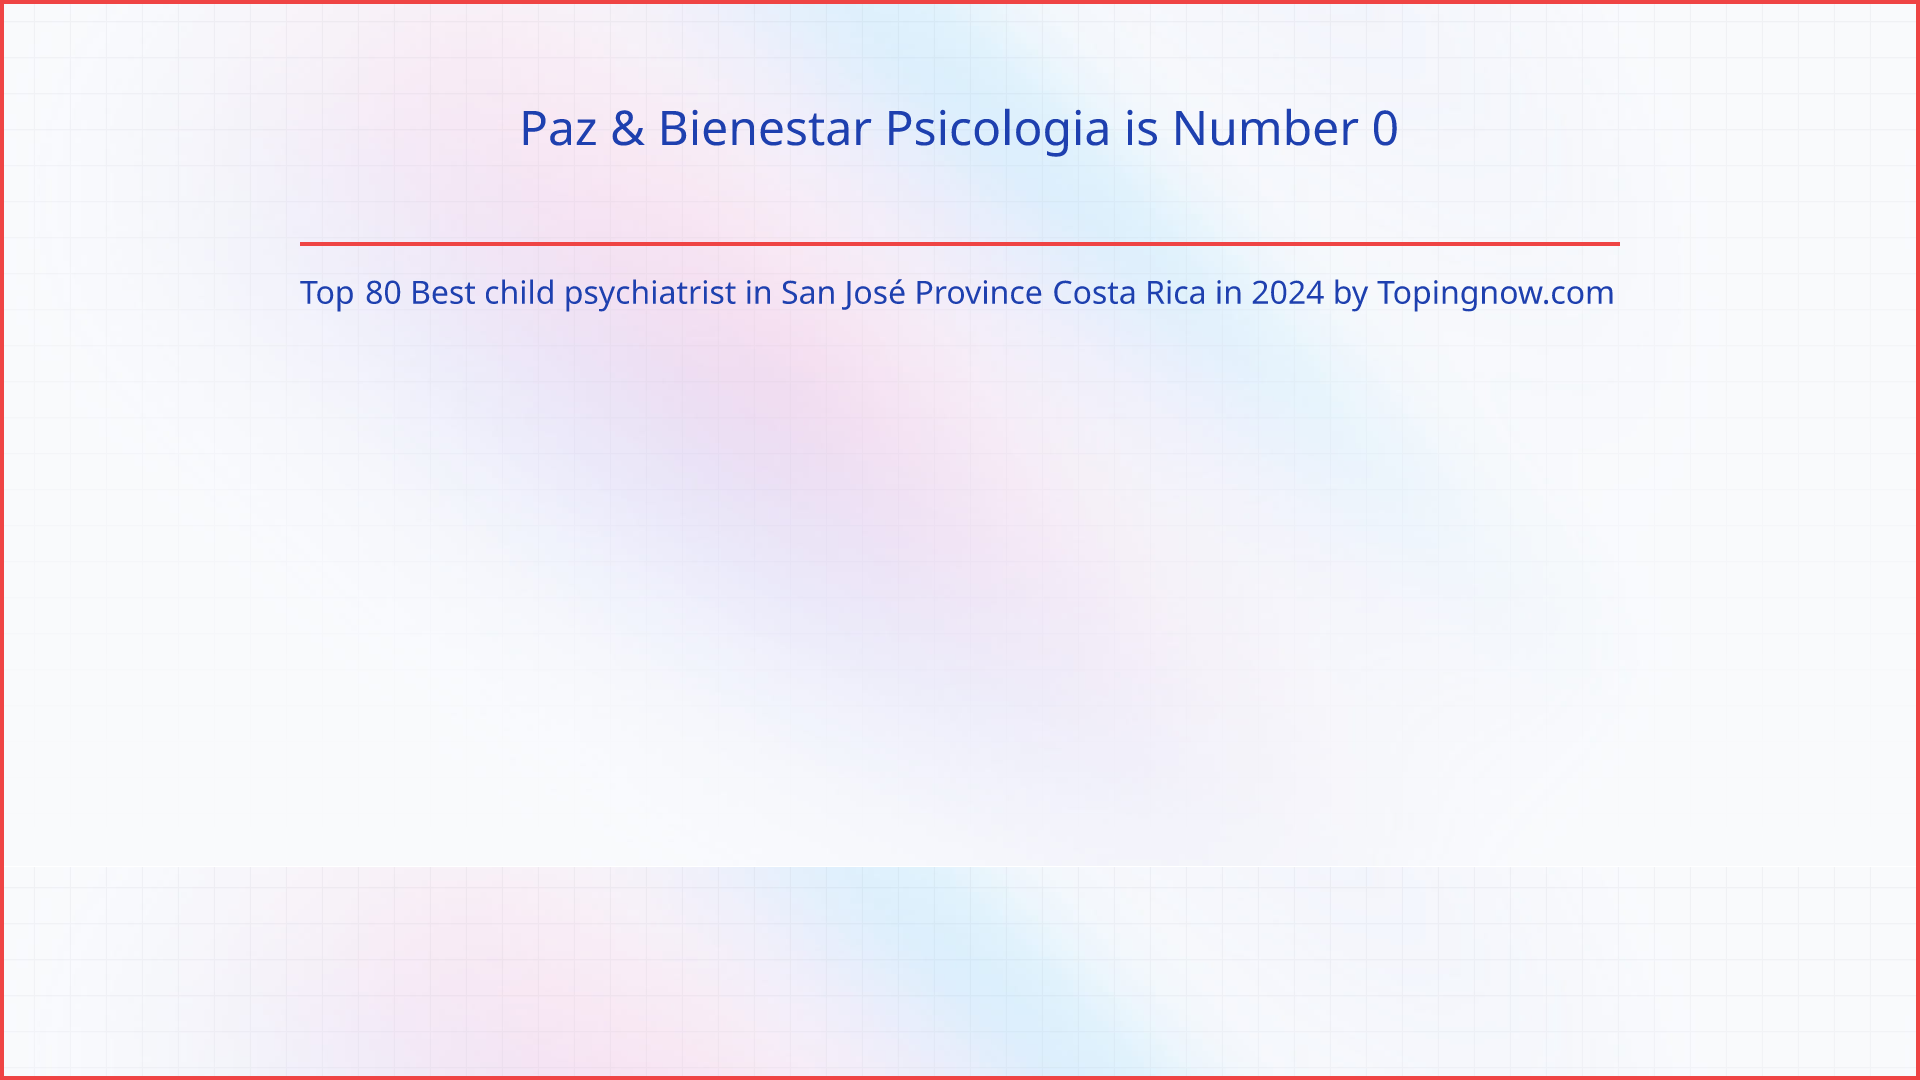 Paz & Bienestar Psicologia: Top 80 Best child psychiatrist in San José Province Costa Rica in 2024